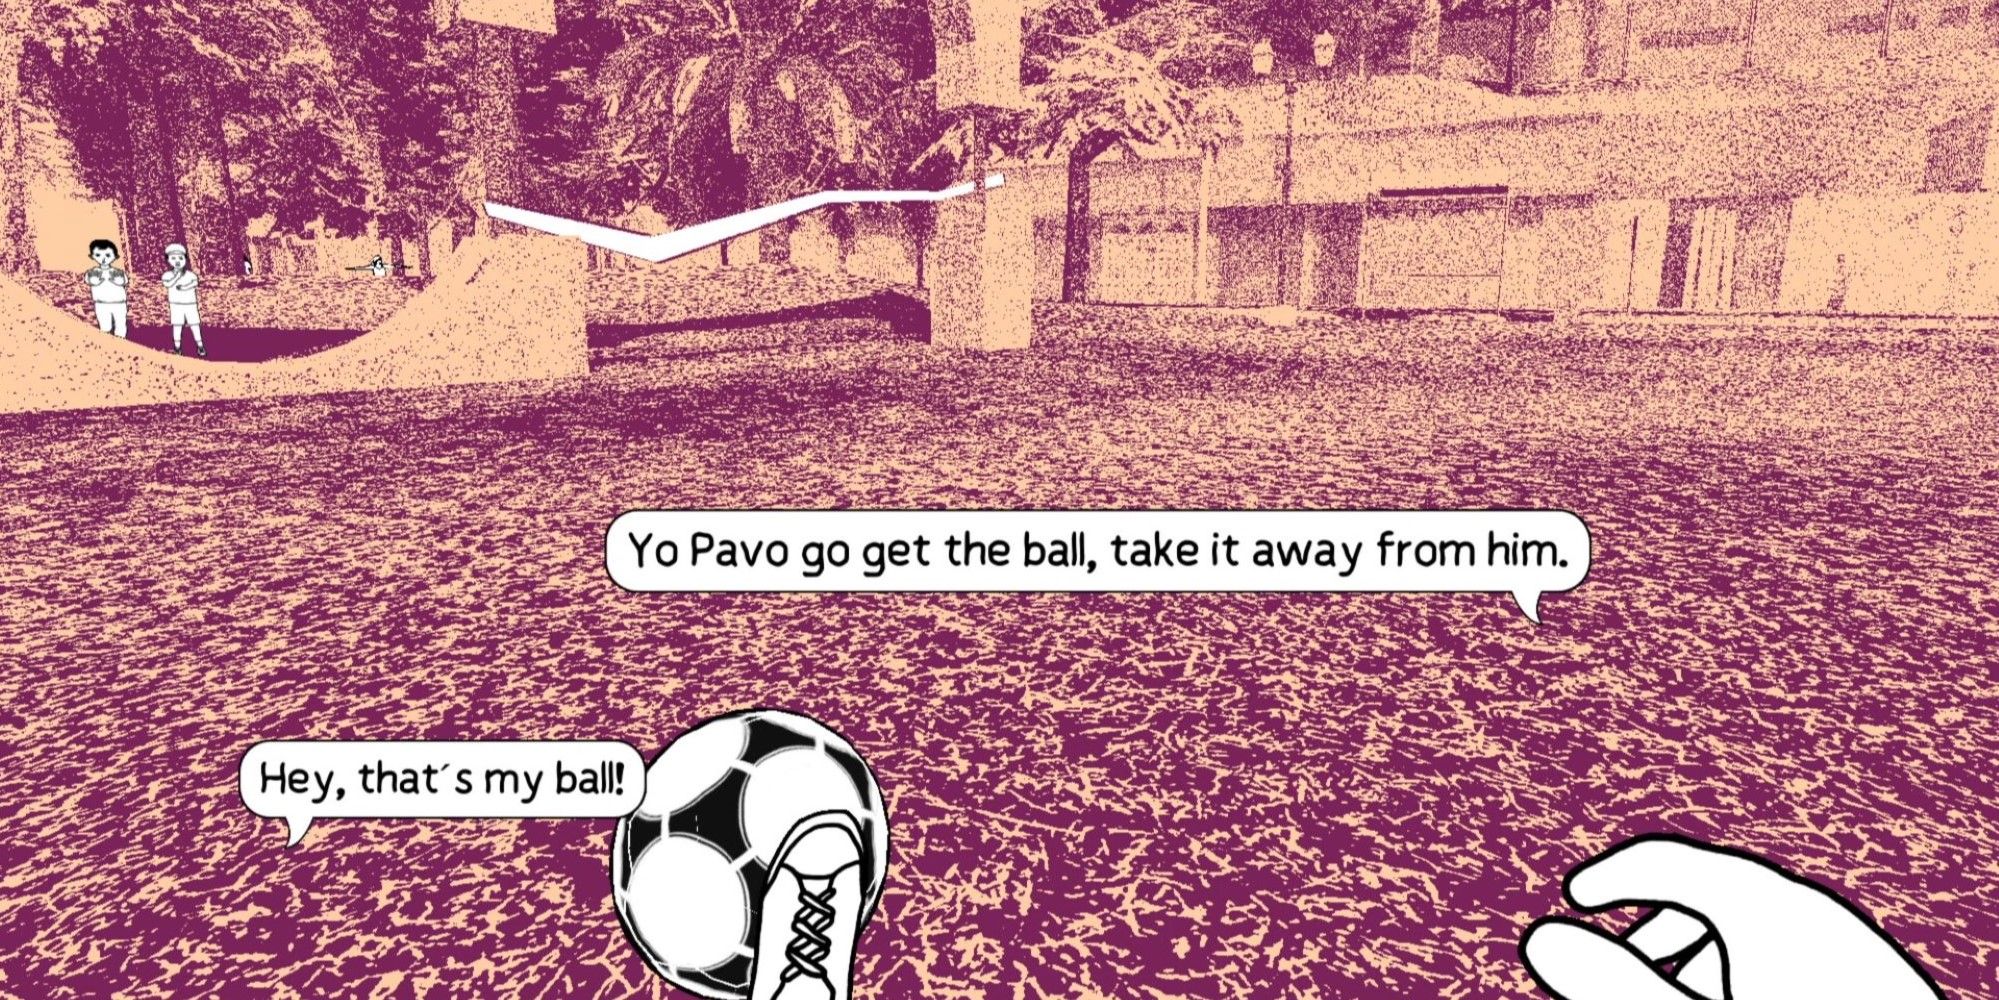 Despelote indie game, Pavo kicking a football